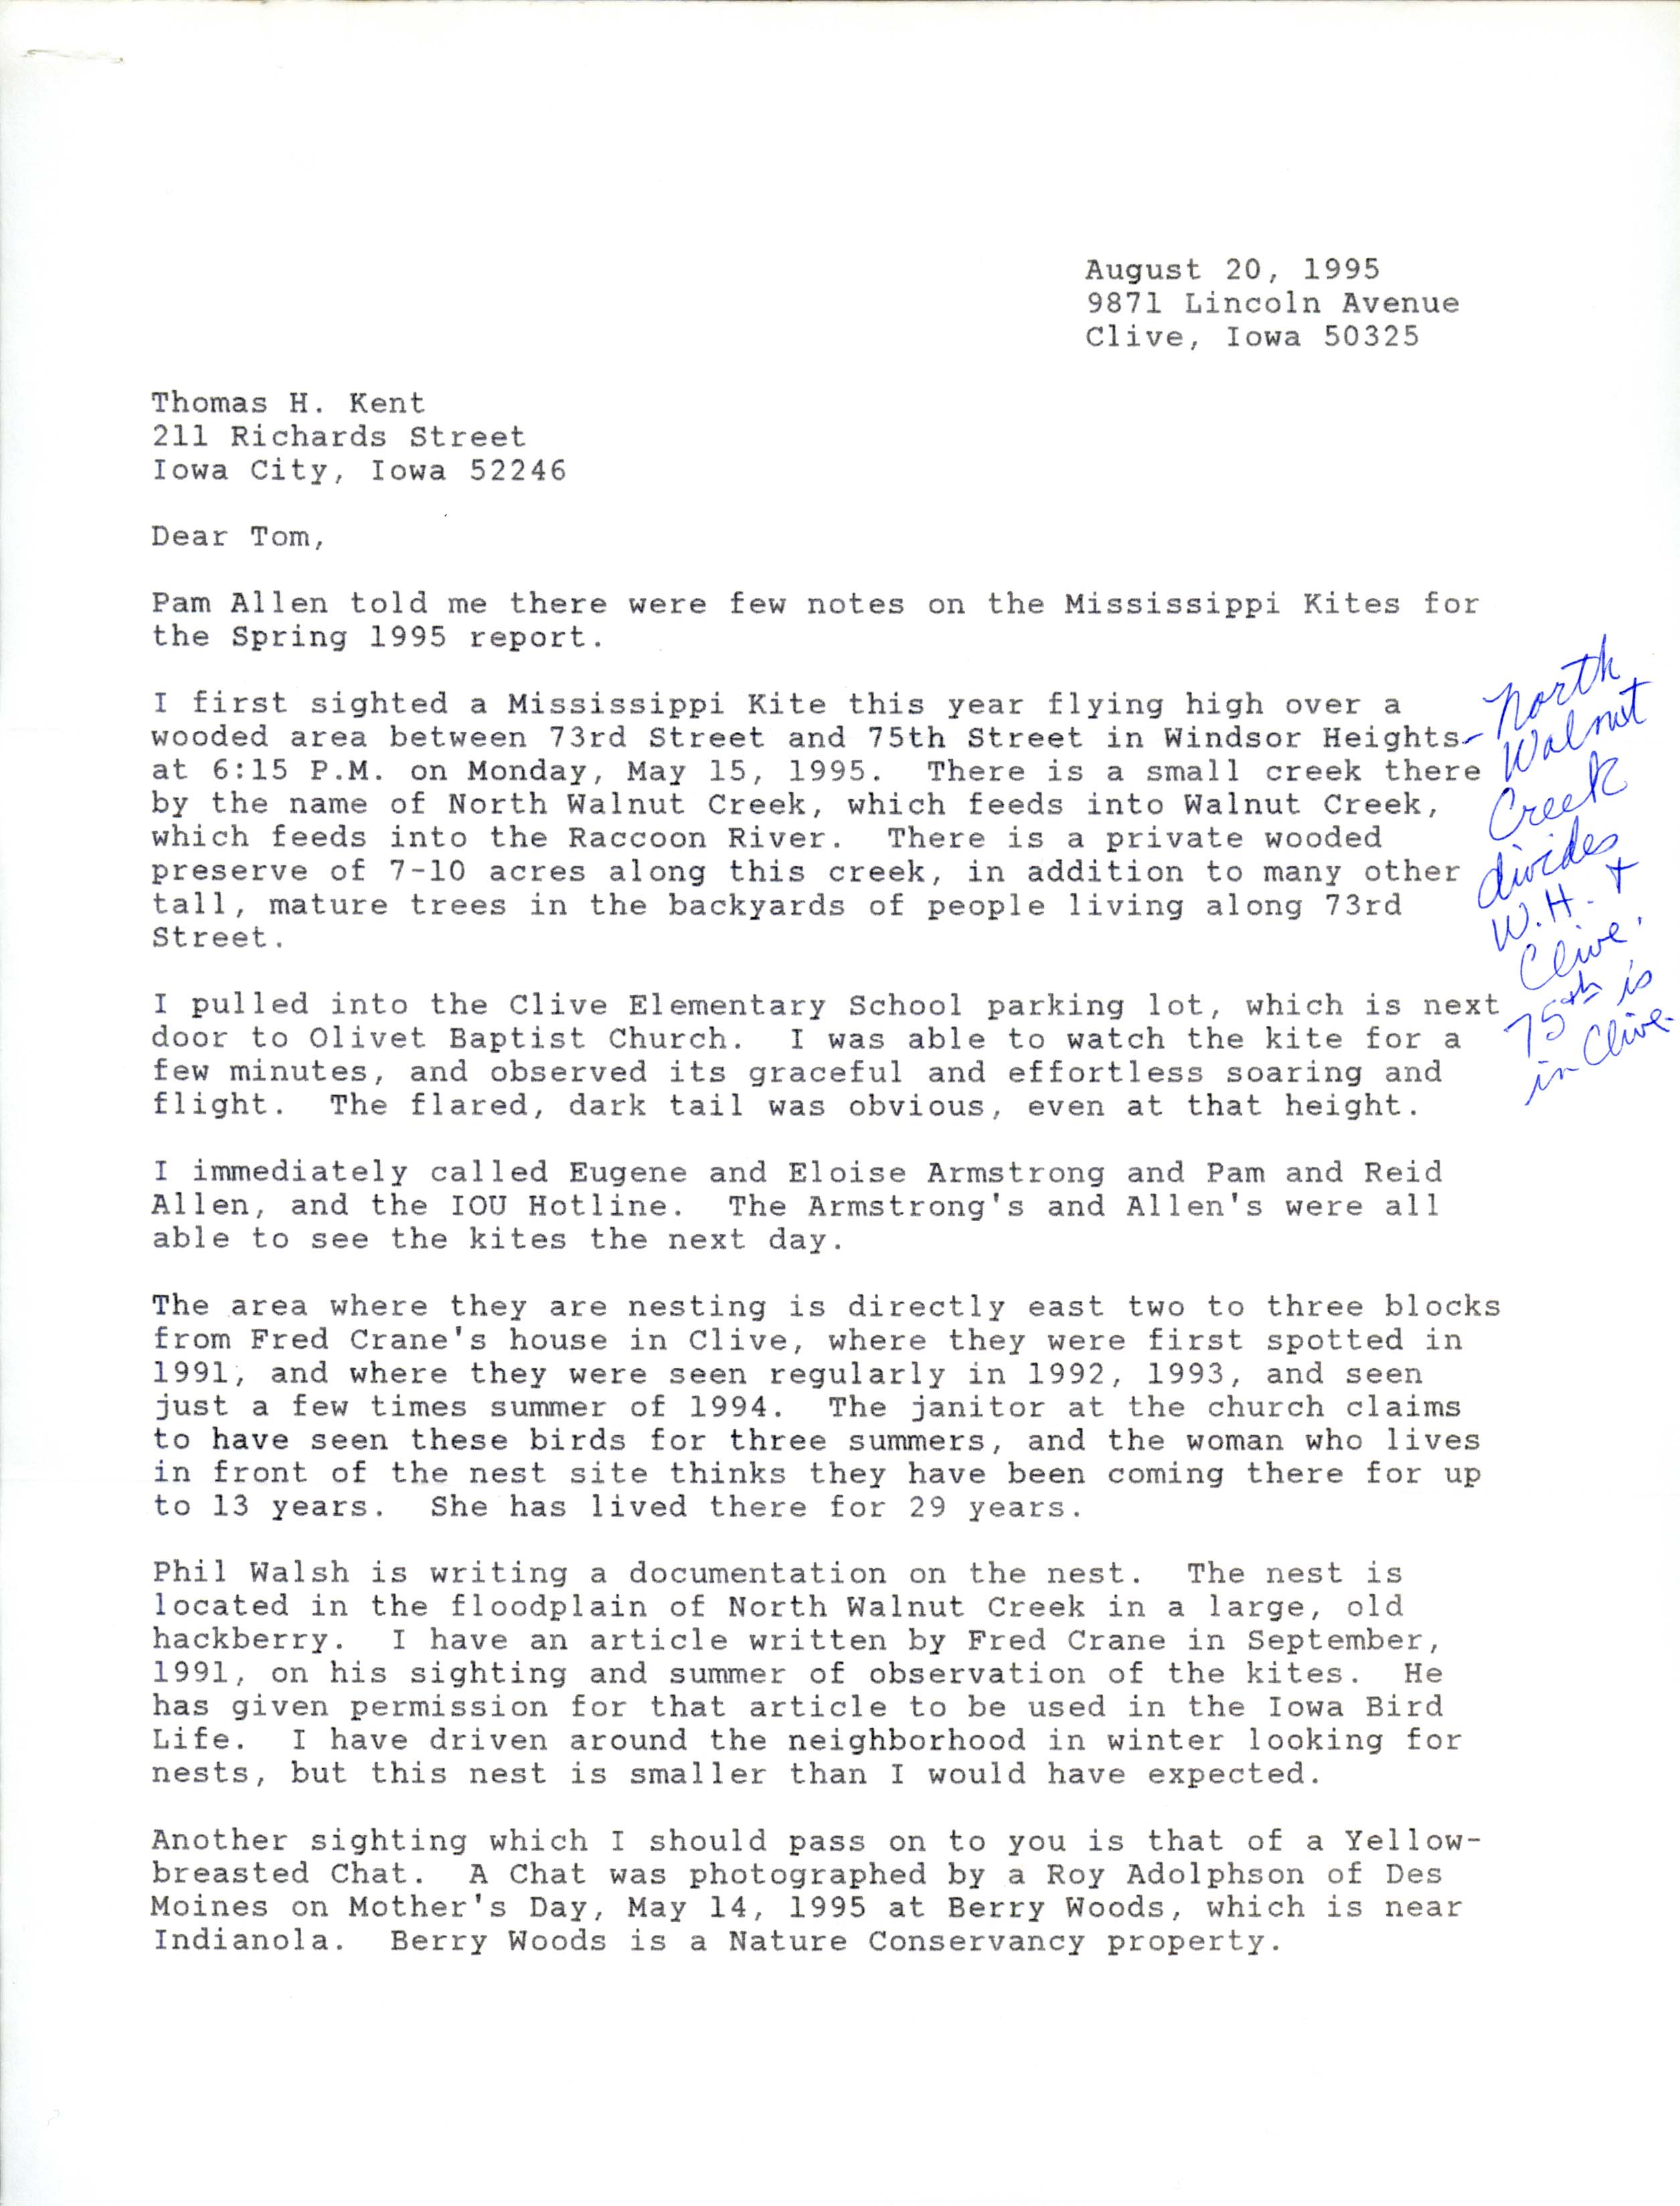 Jane Clark letter to Thomas H. Kent regarding bird sightings, August 20, 1995